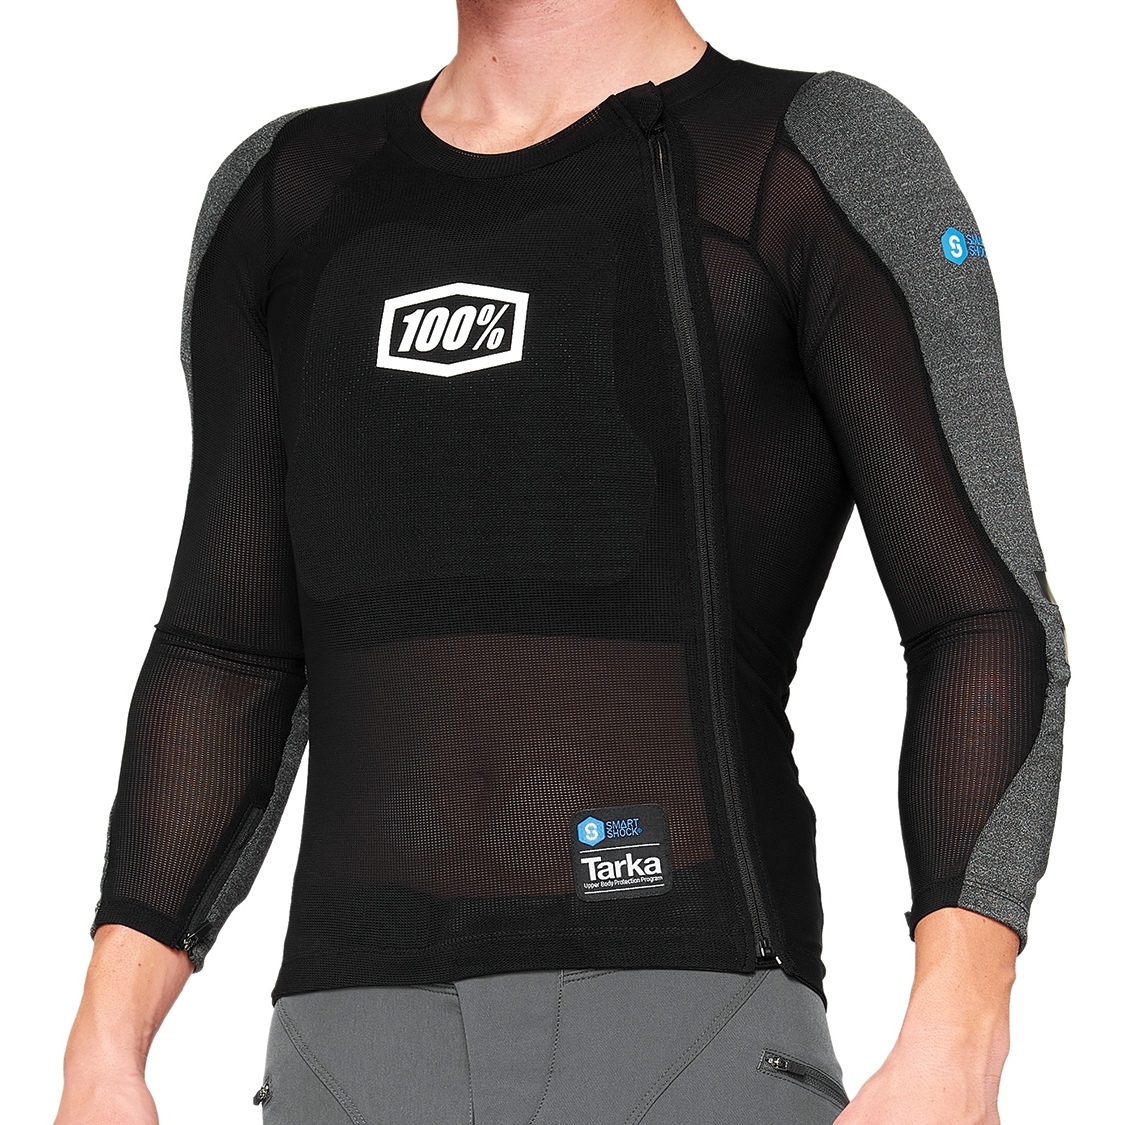 Productfoto van 100% Tarka Long Sleeve Protection Vest - black